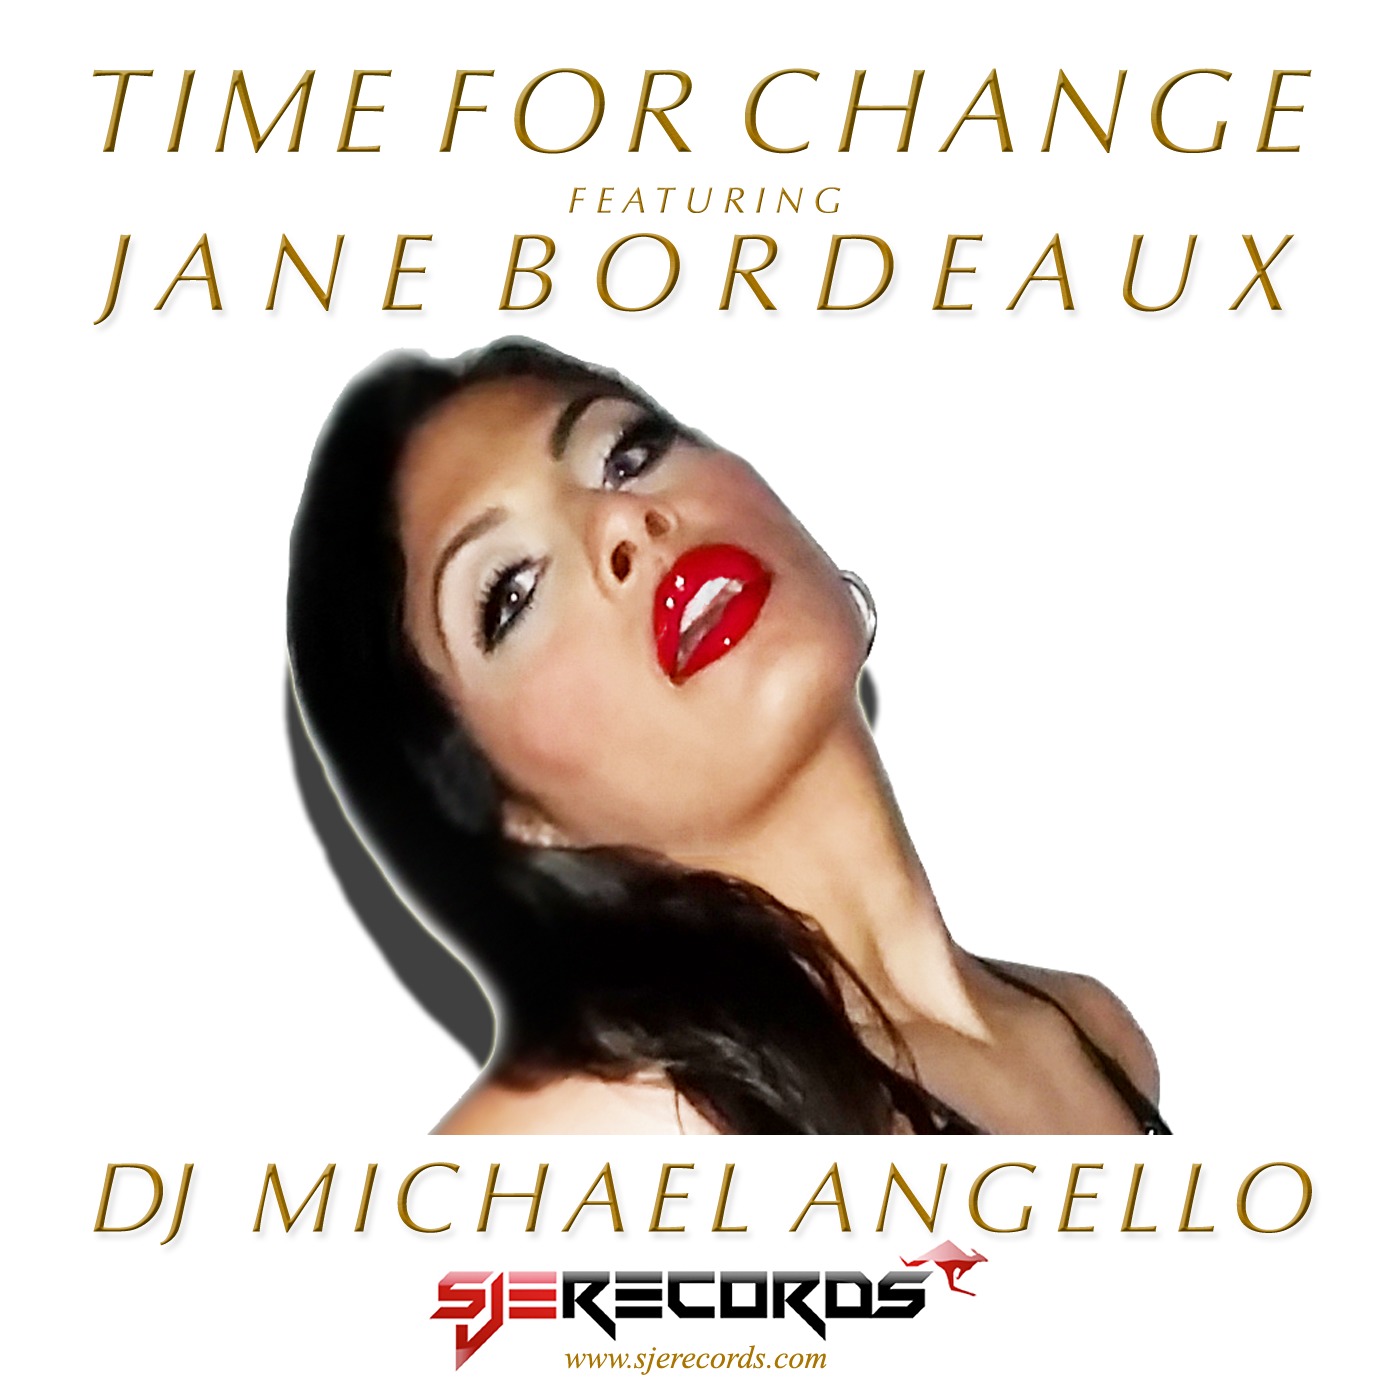 (NEW MUSIC) TIME FOR CHANGE By Jane Bordeaux Feat. Music By DJ MICHAELANGELLO - Future Release - SJE RECORDS Australia